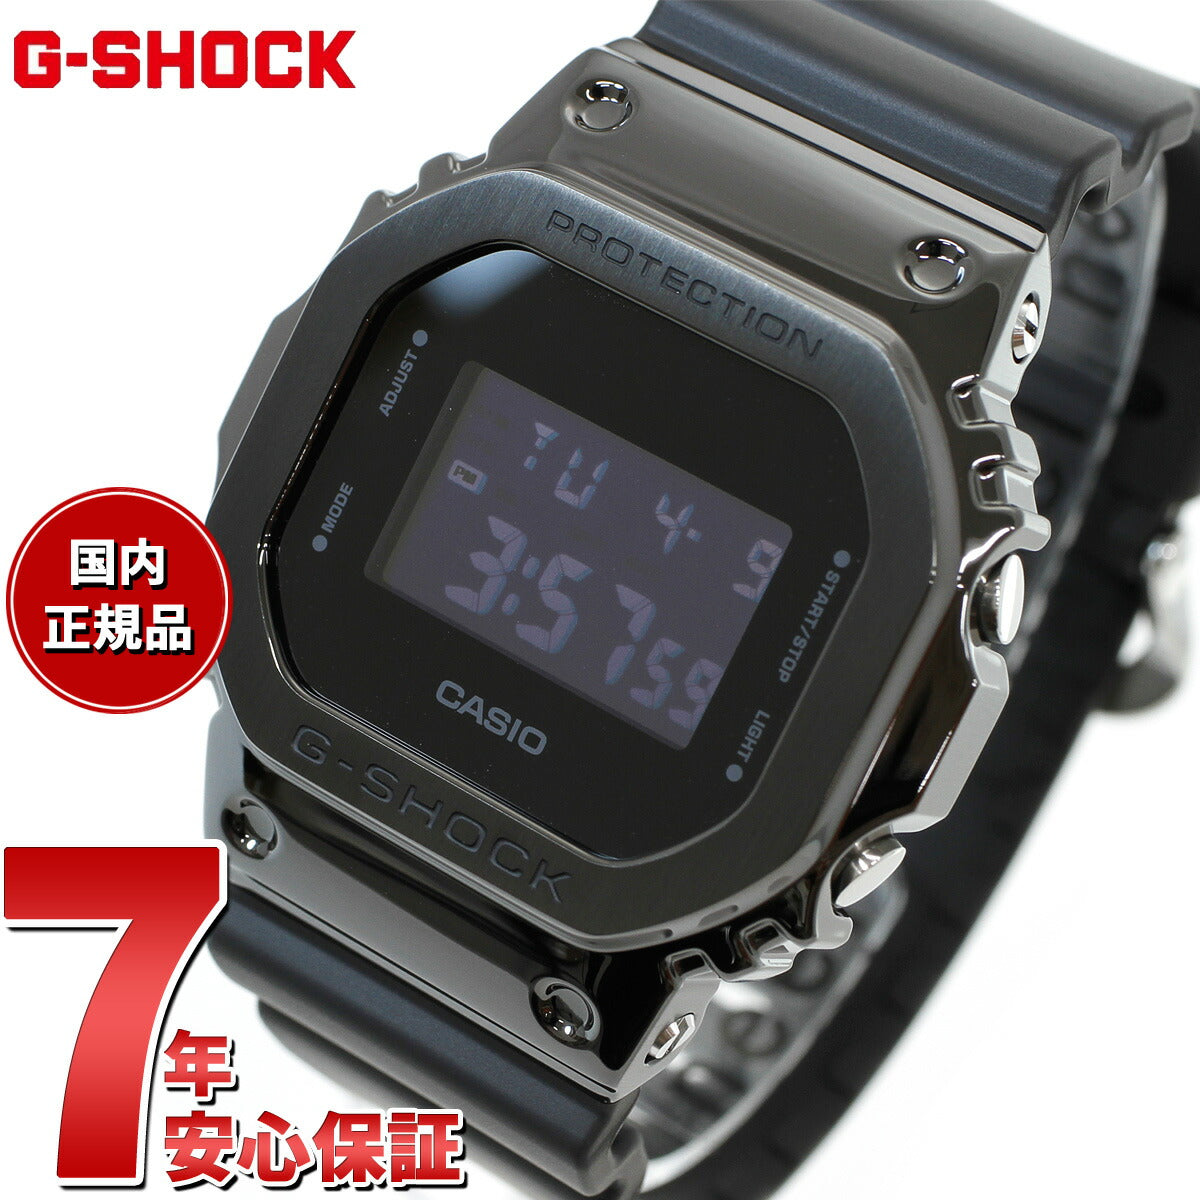 G-SHOCK デジタル カシオ Gショック CASIO 腕時計 メンズ GM-5600UB-1JF オールブラック メタルカバー LEDバ –  neel selectshop